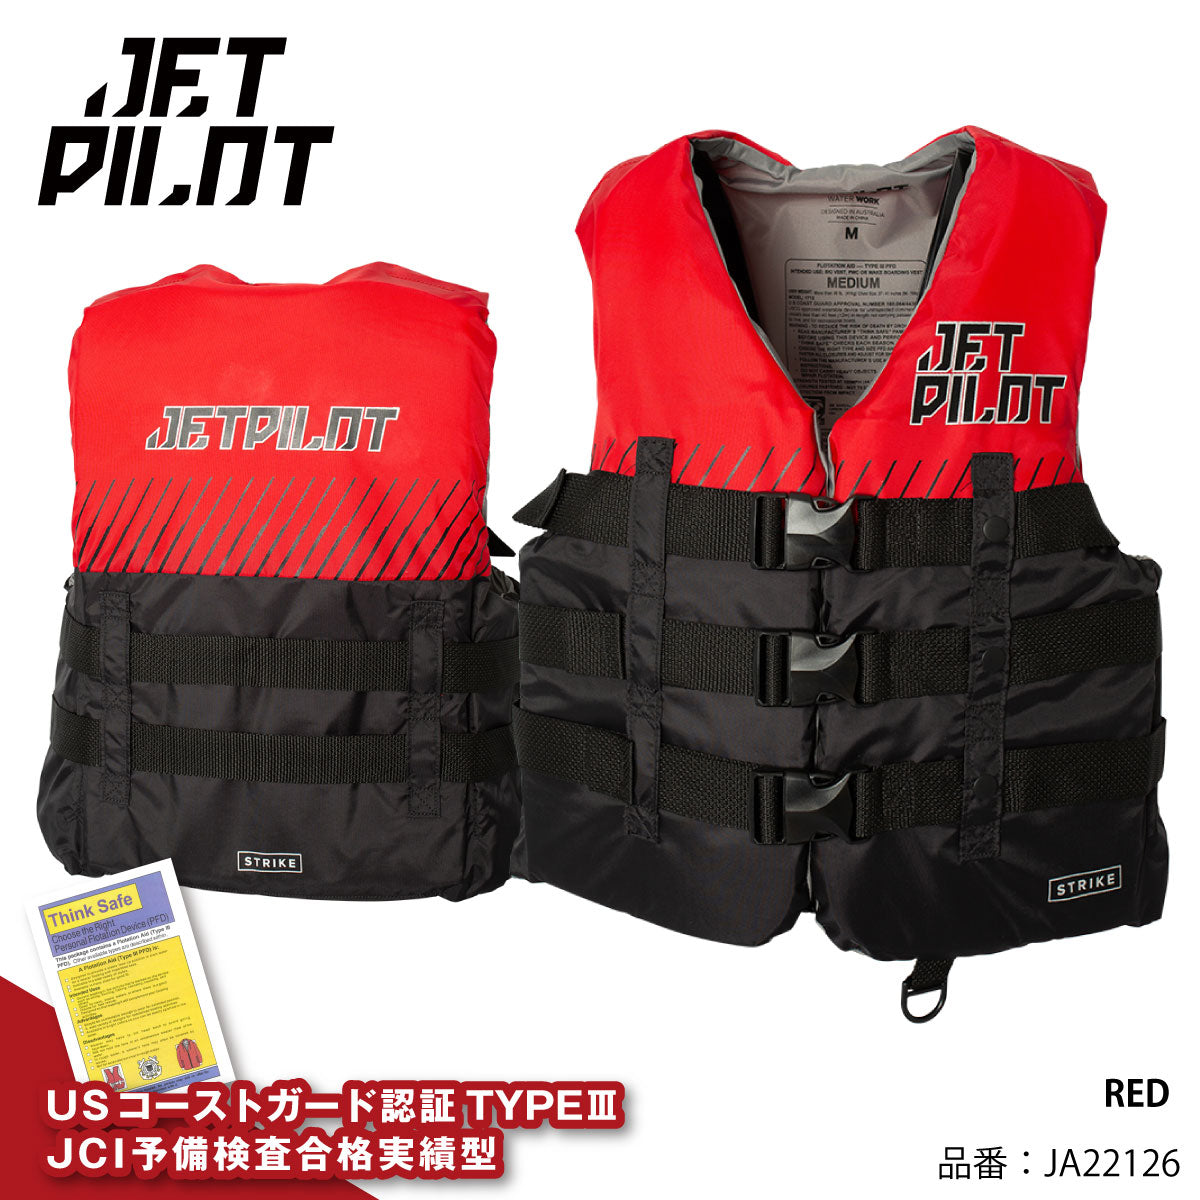 JETPILOT Life Jacket Small Boat Special JA22126 Genuine Product STRIKE JCI Preliminary Inspection Approved Coast Guard